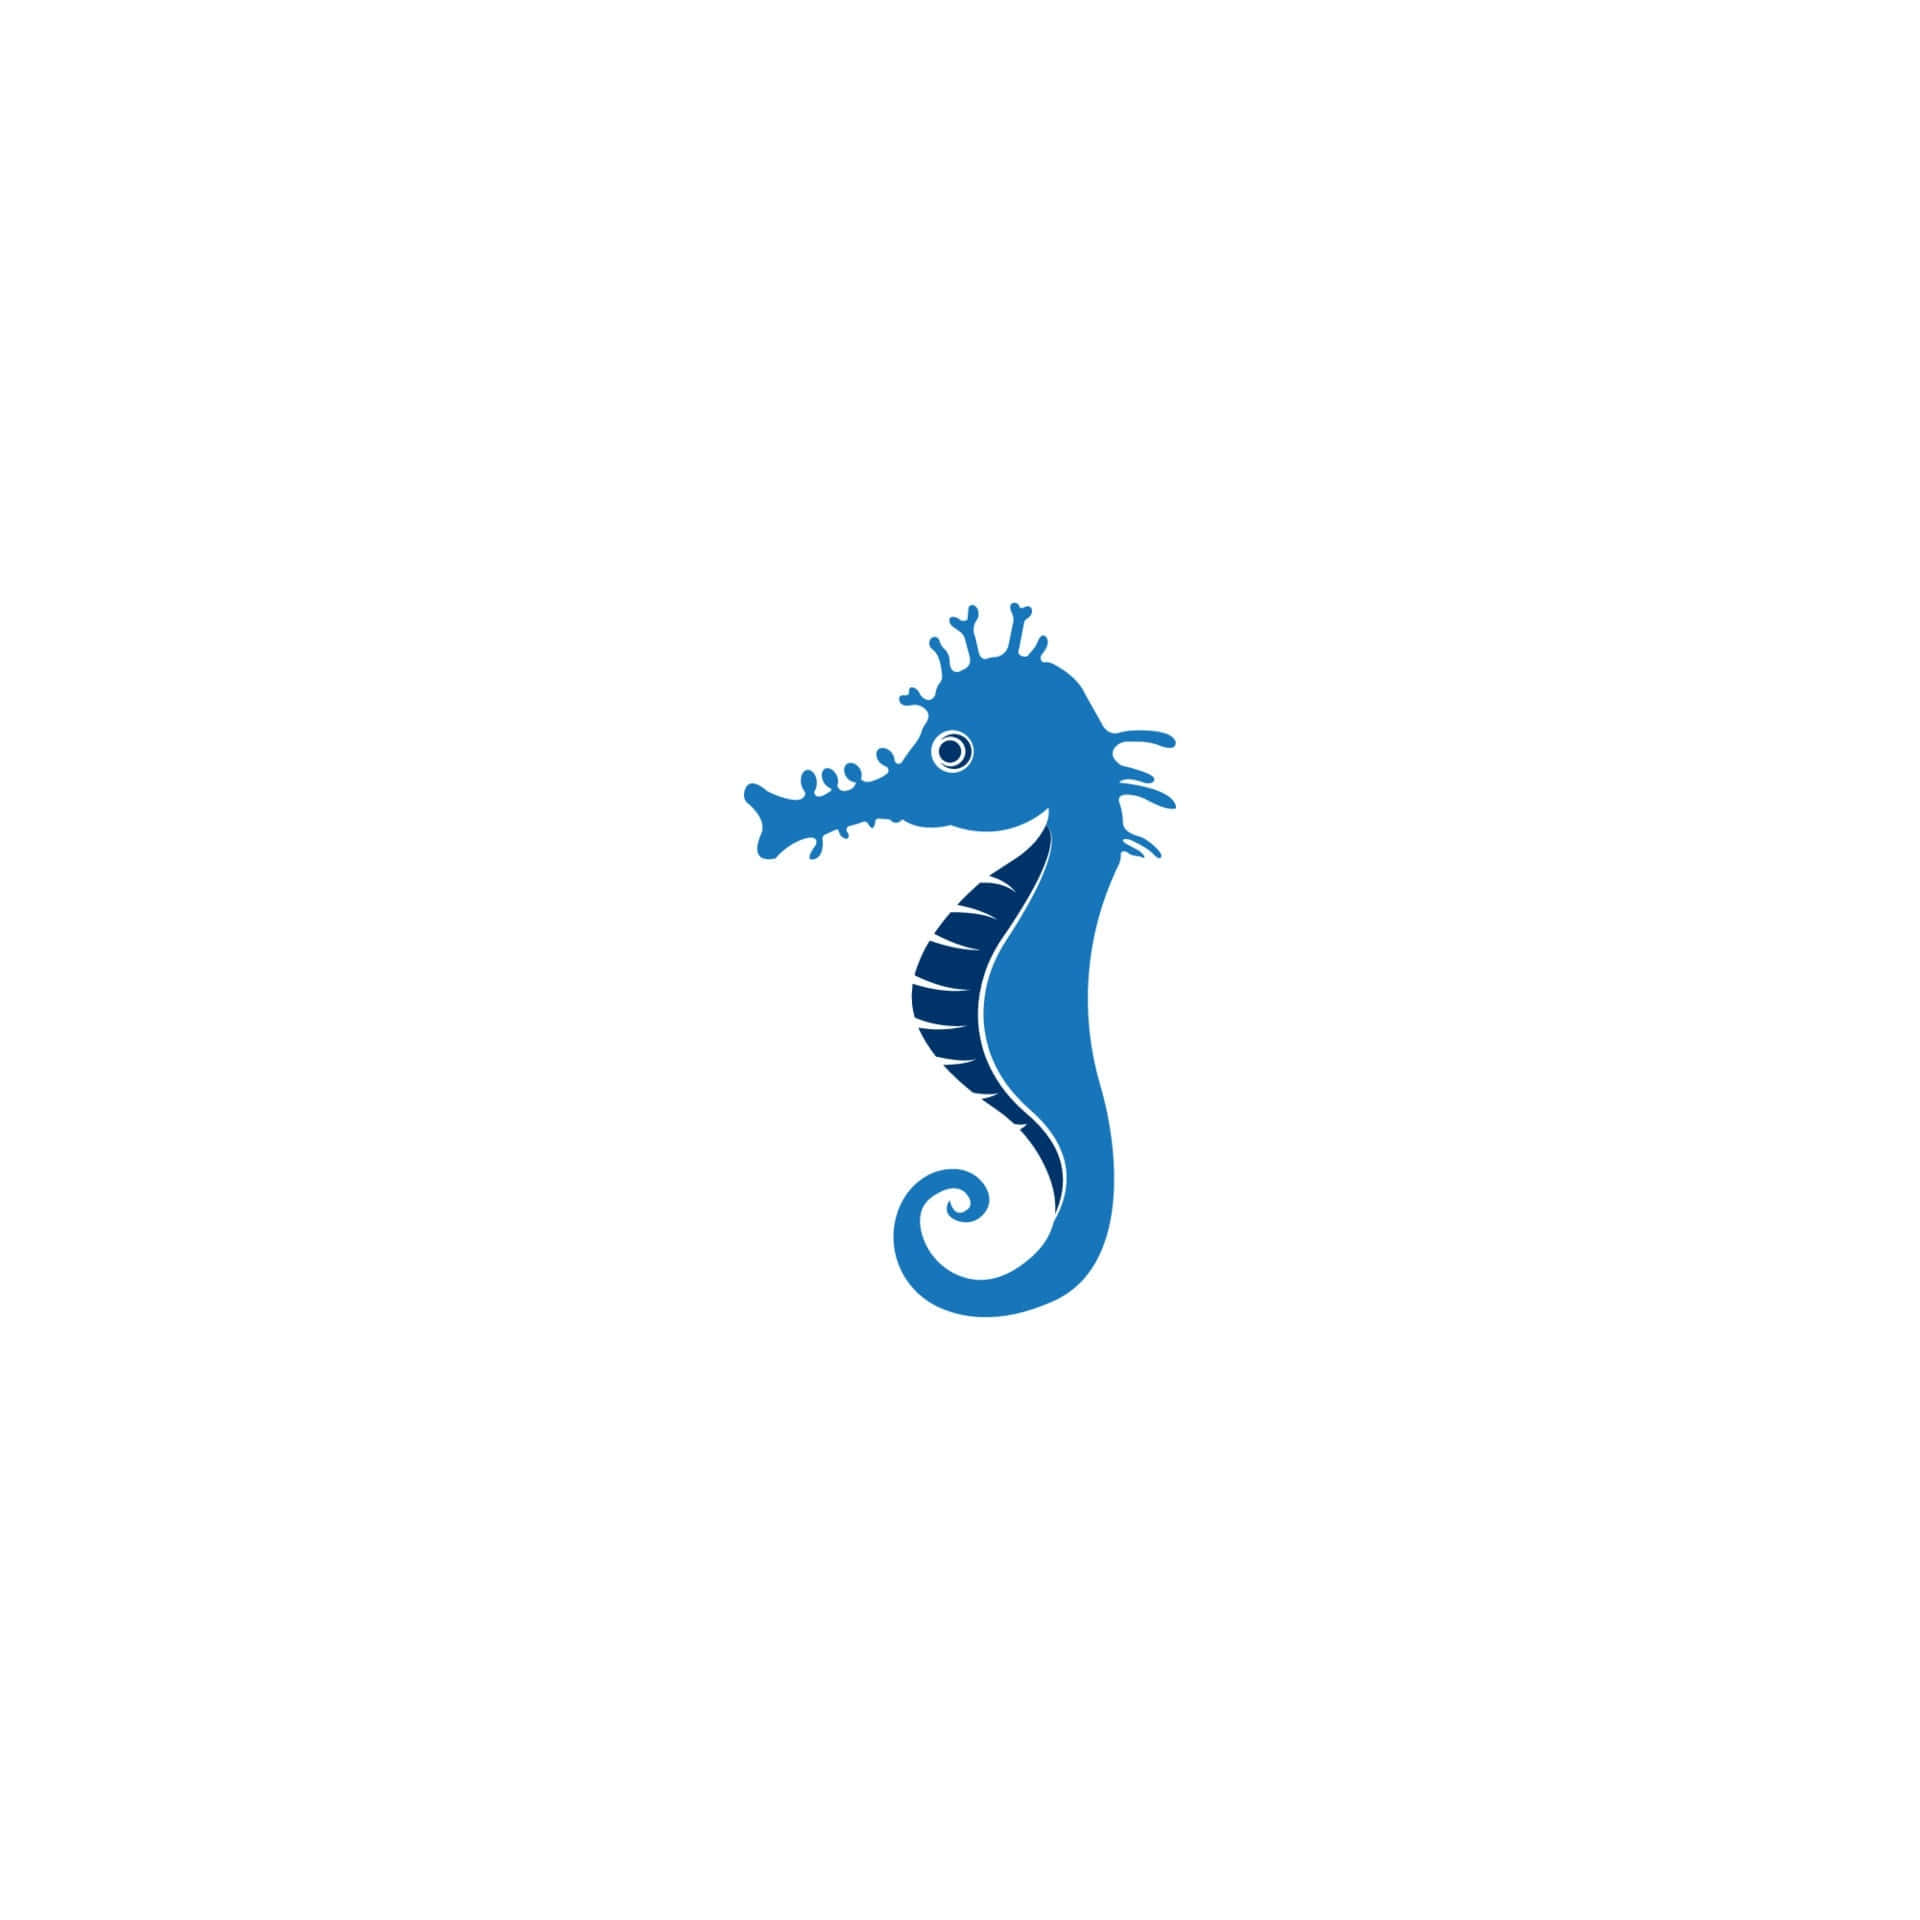 A beautiful ocean seahorse